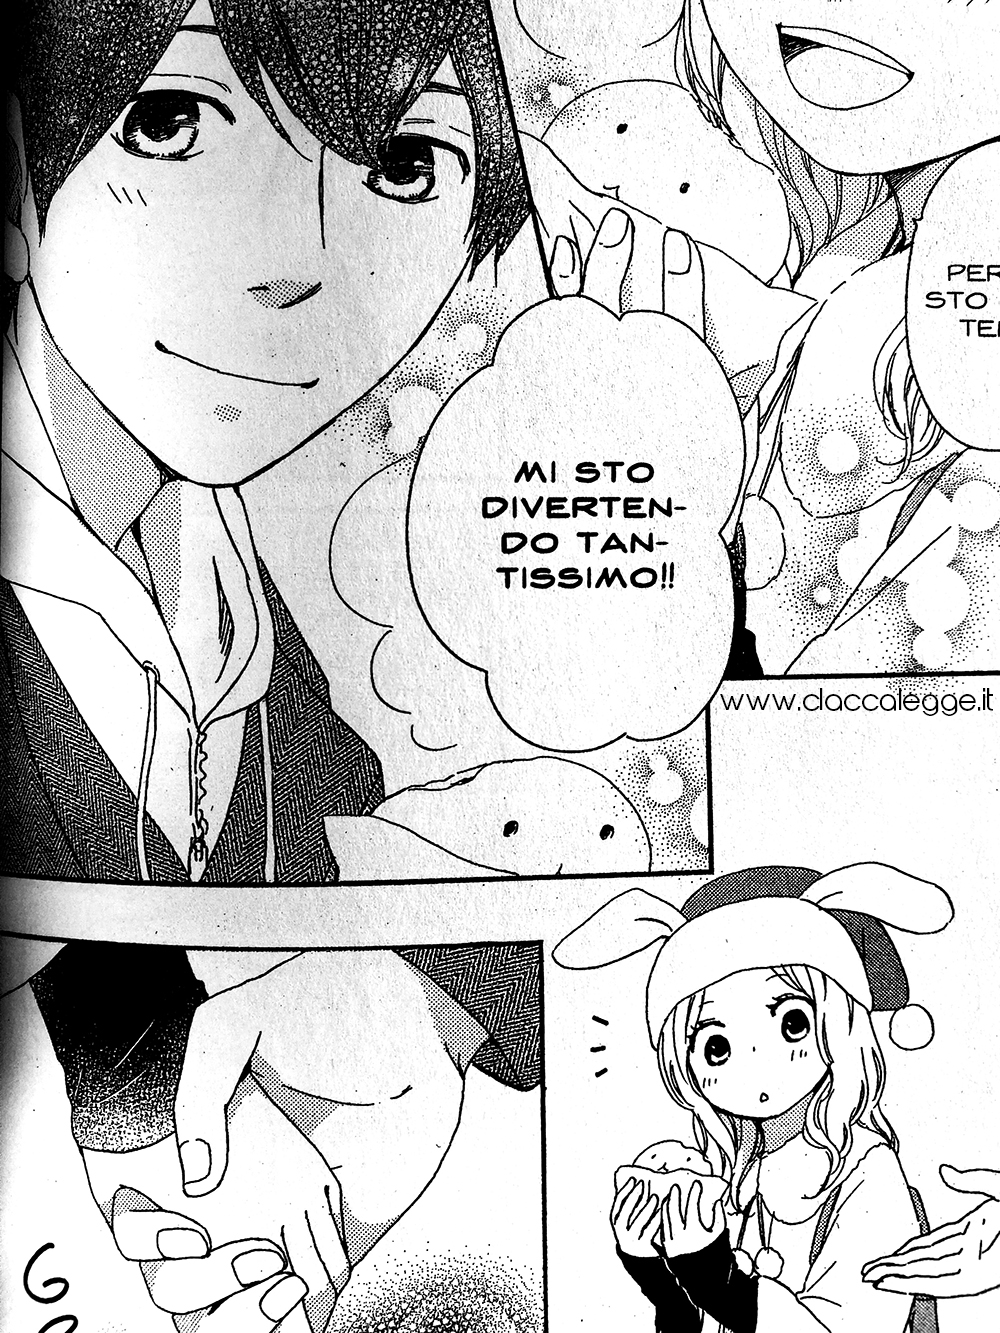 EVERPOP: A Tutto Manga: Marmalade Boy Little di Wataru Yoshizumi